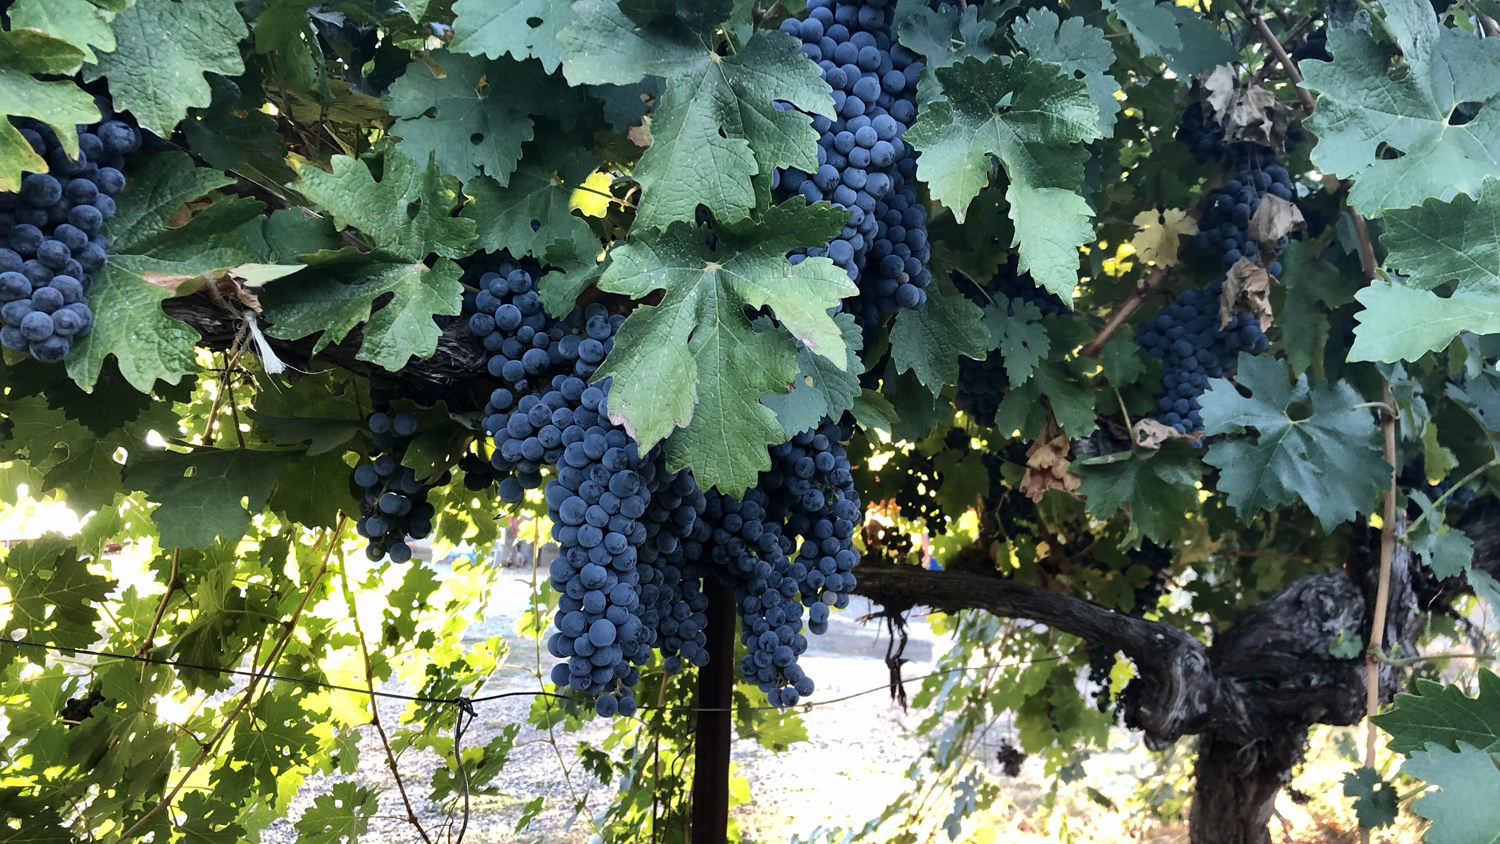 Sierra Vista Vineyards & Winery View of Grape and Grape Vines